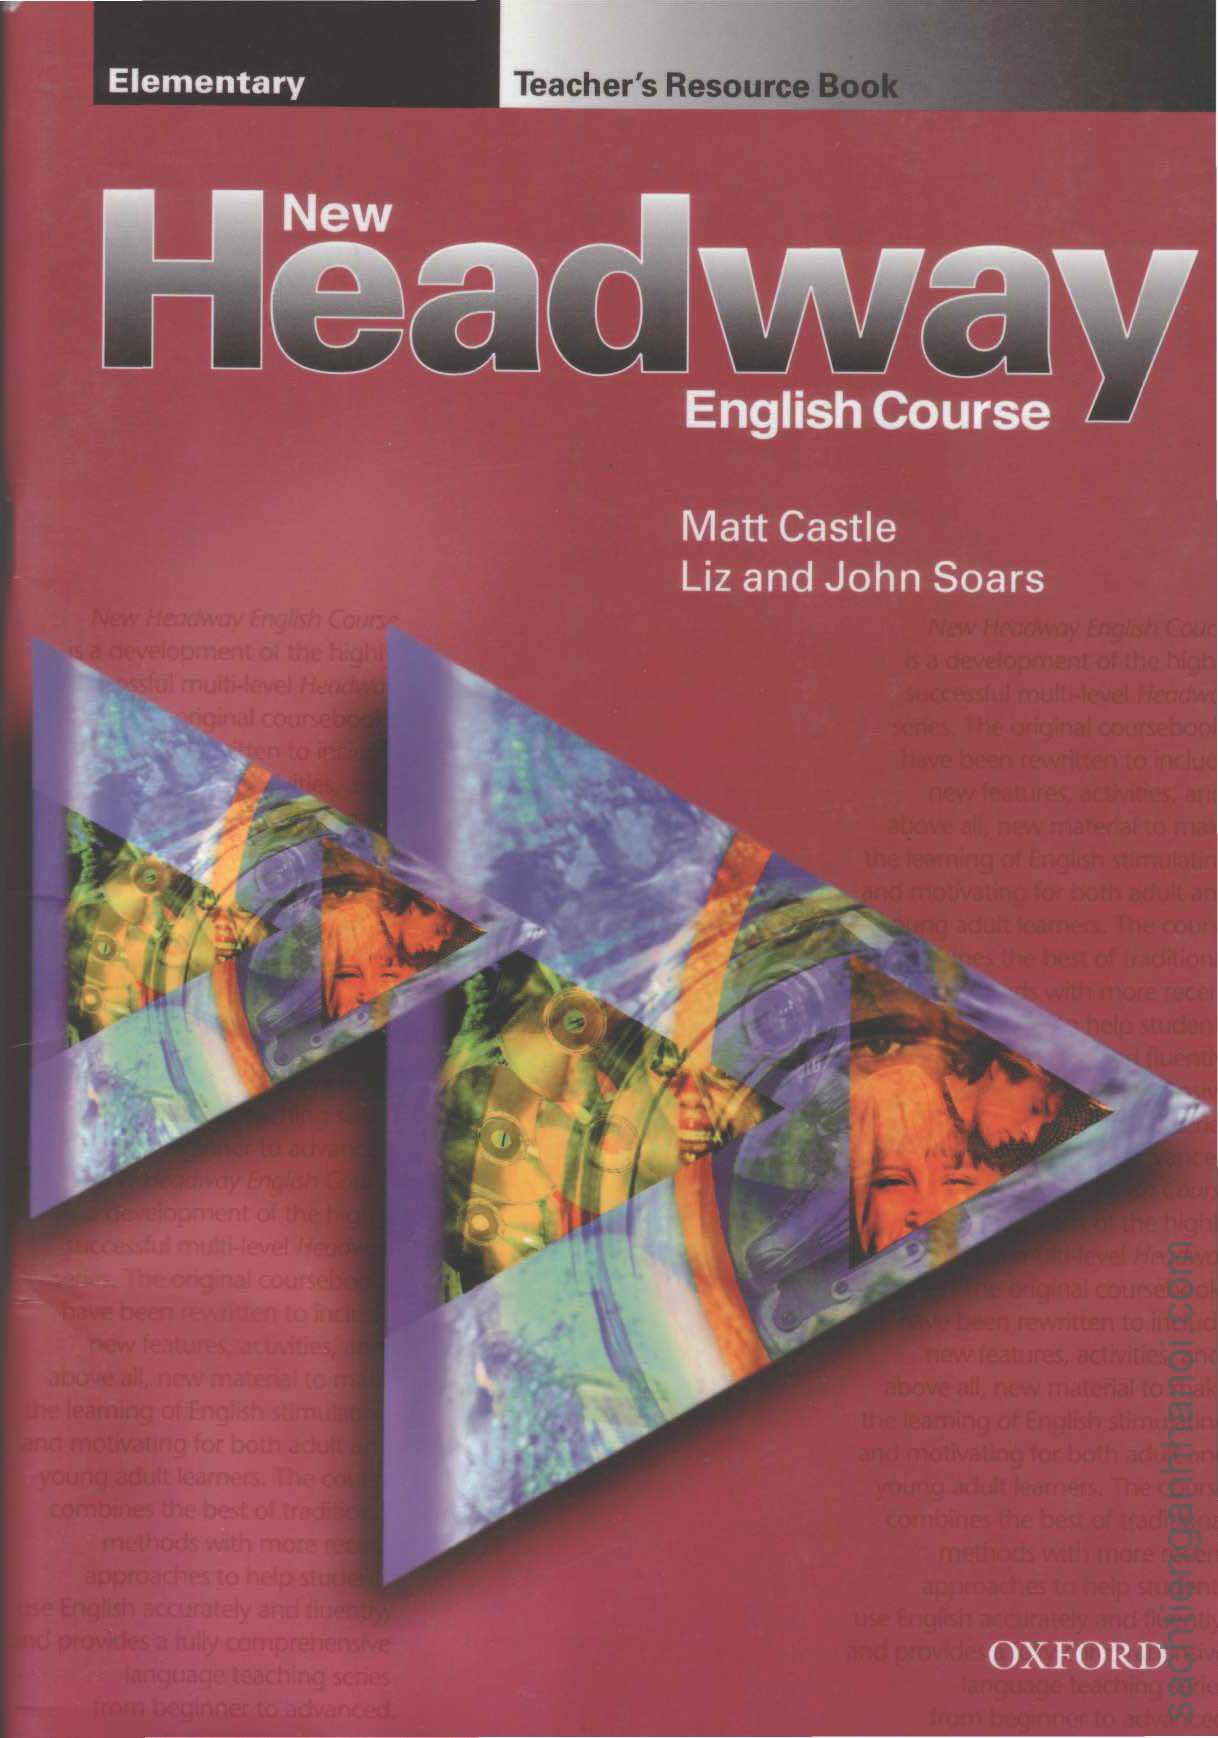 Headway intermediate teacher's book. John and Liz Soars New Headway third Edition. New Headway Elementary English course. Headway Elementary Liz and John Soars. New Headway English course.